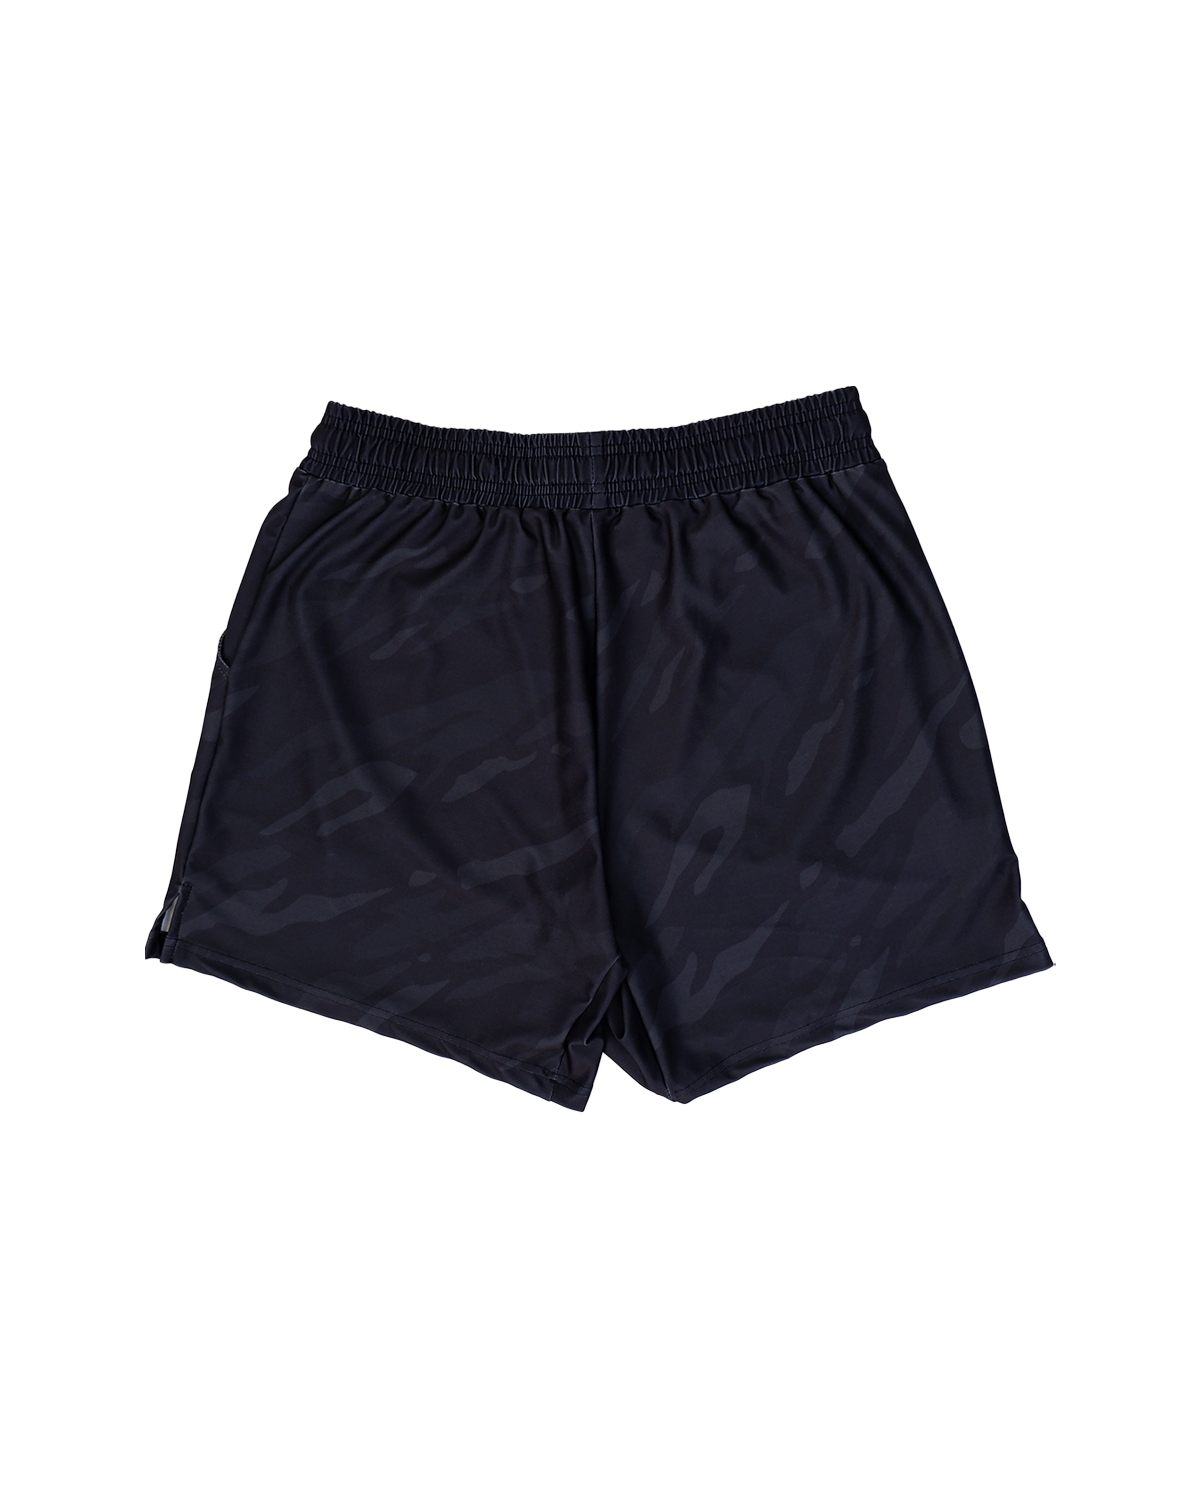 Black Ghost Camo Gym Shorts (5"&7" Inseam)